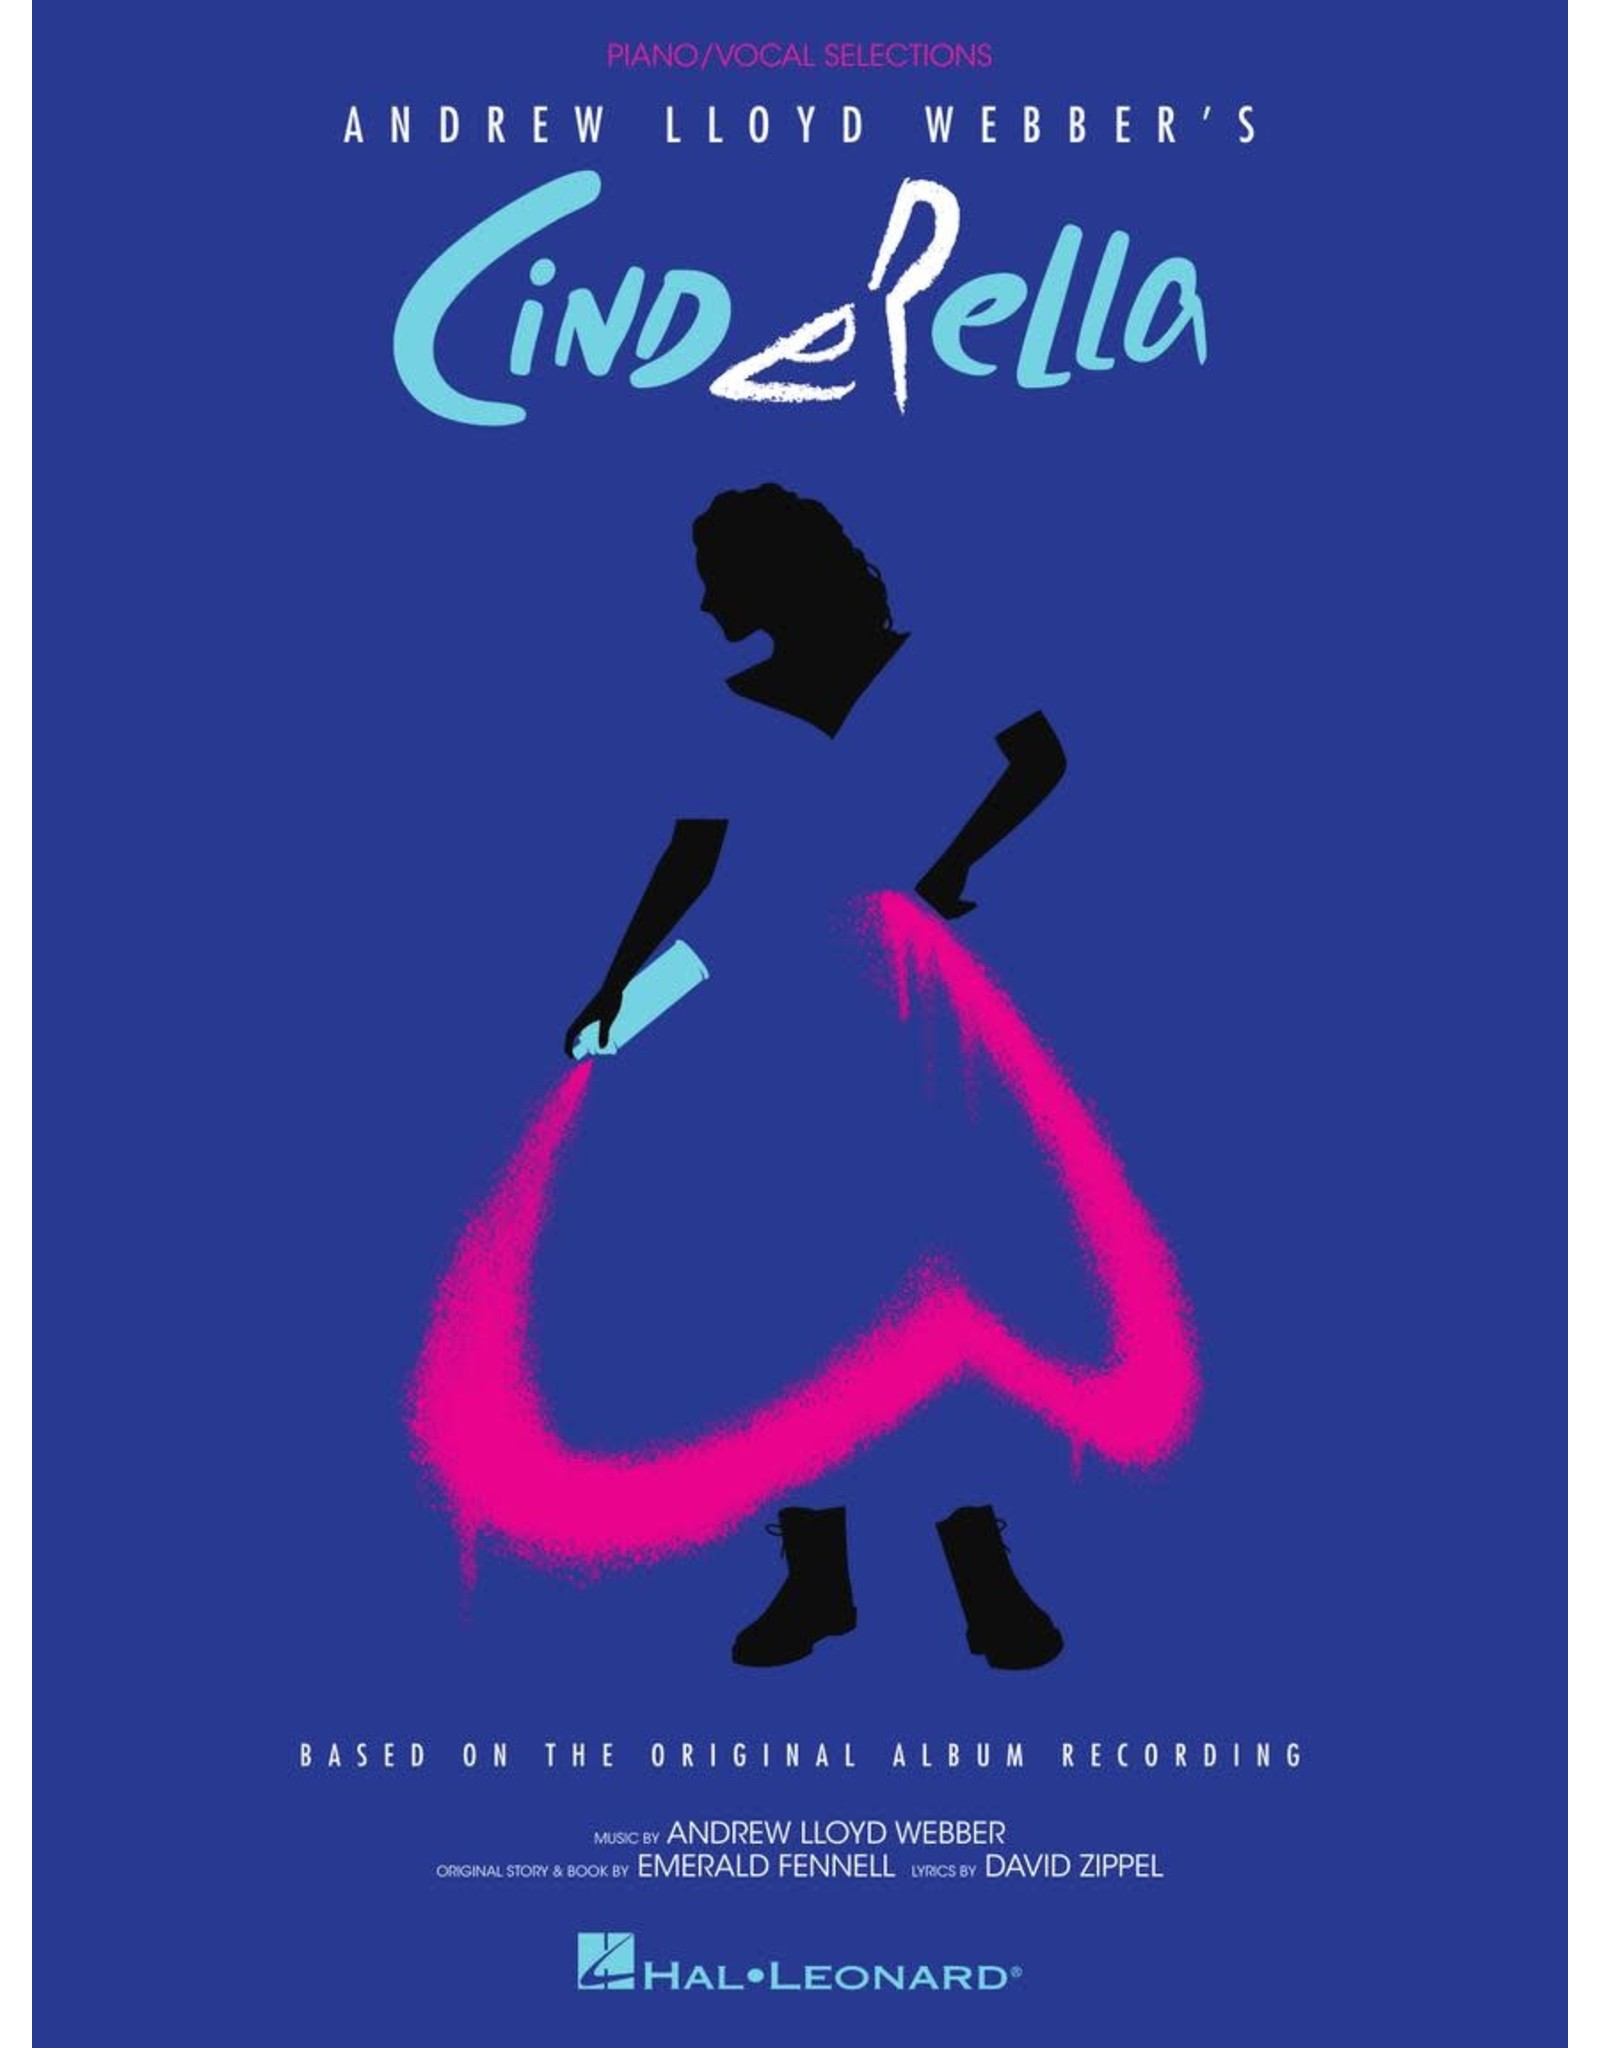 Hal Leonard Andrew Lloyd Webber's Cinderella - Piano/Vocal Selections